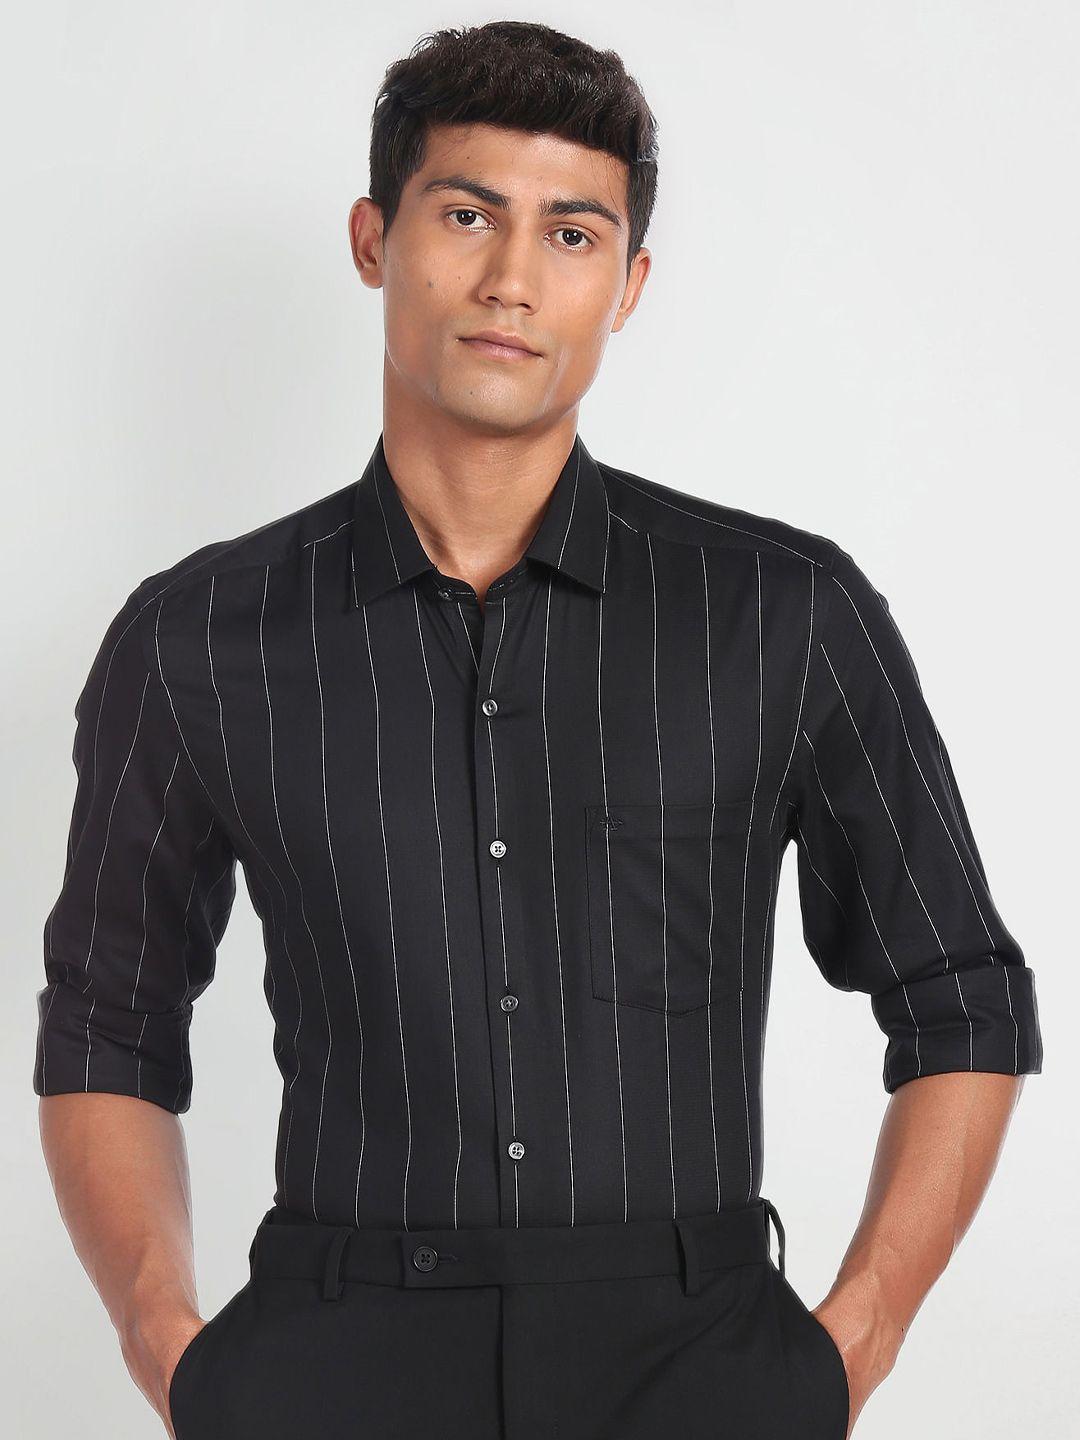 arrow slim fit opaque striped formal shirt